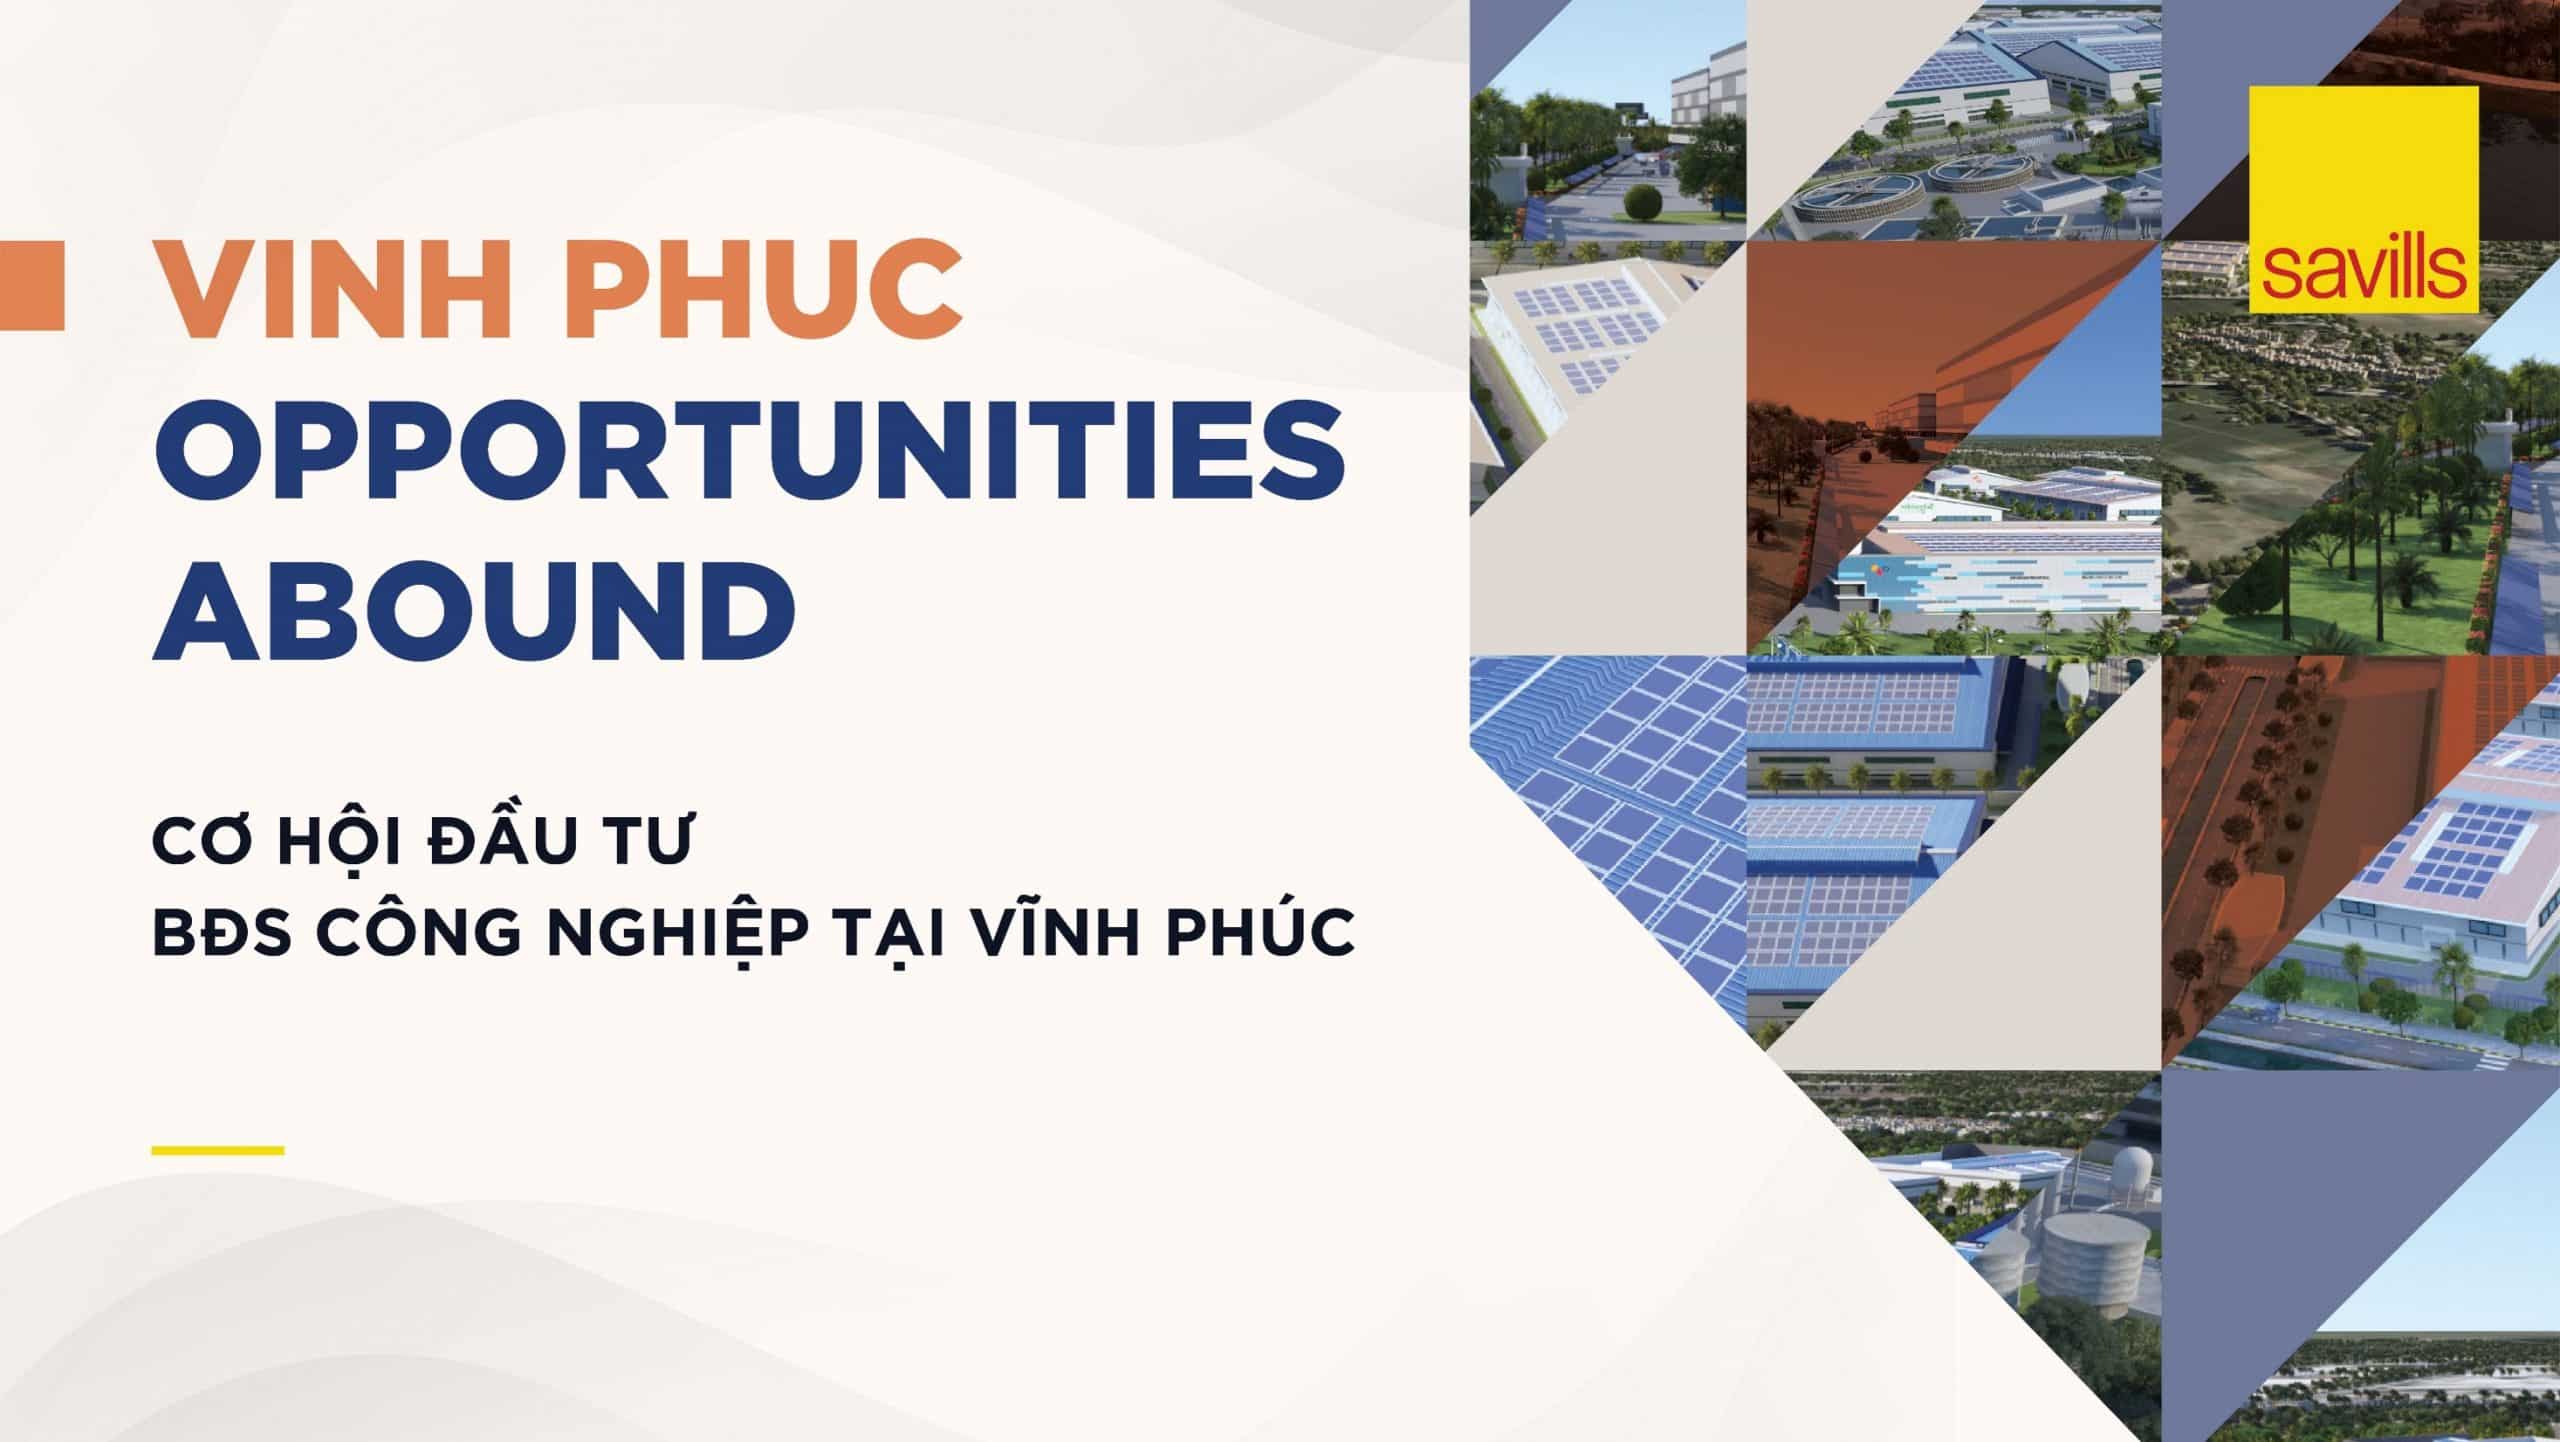 Ha Noi Event: Vinh Phuc – Opportunities Abound